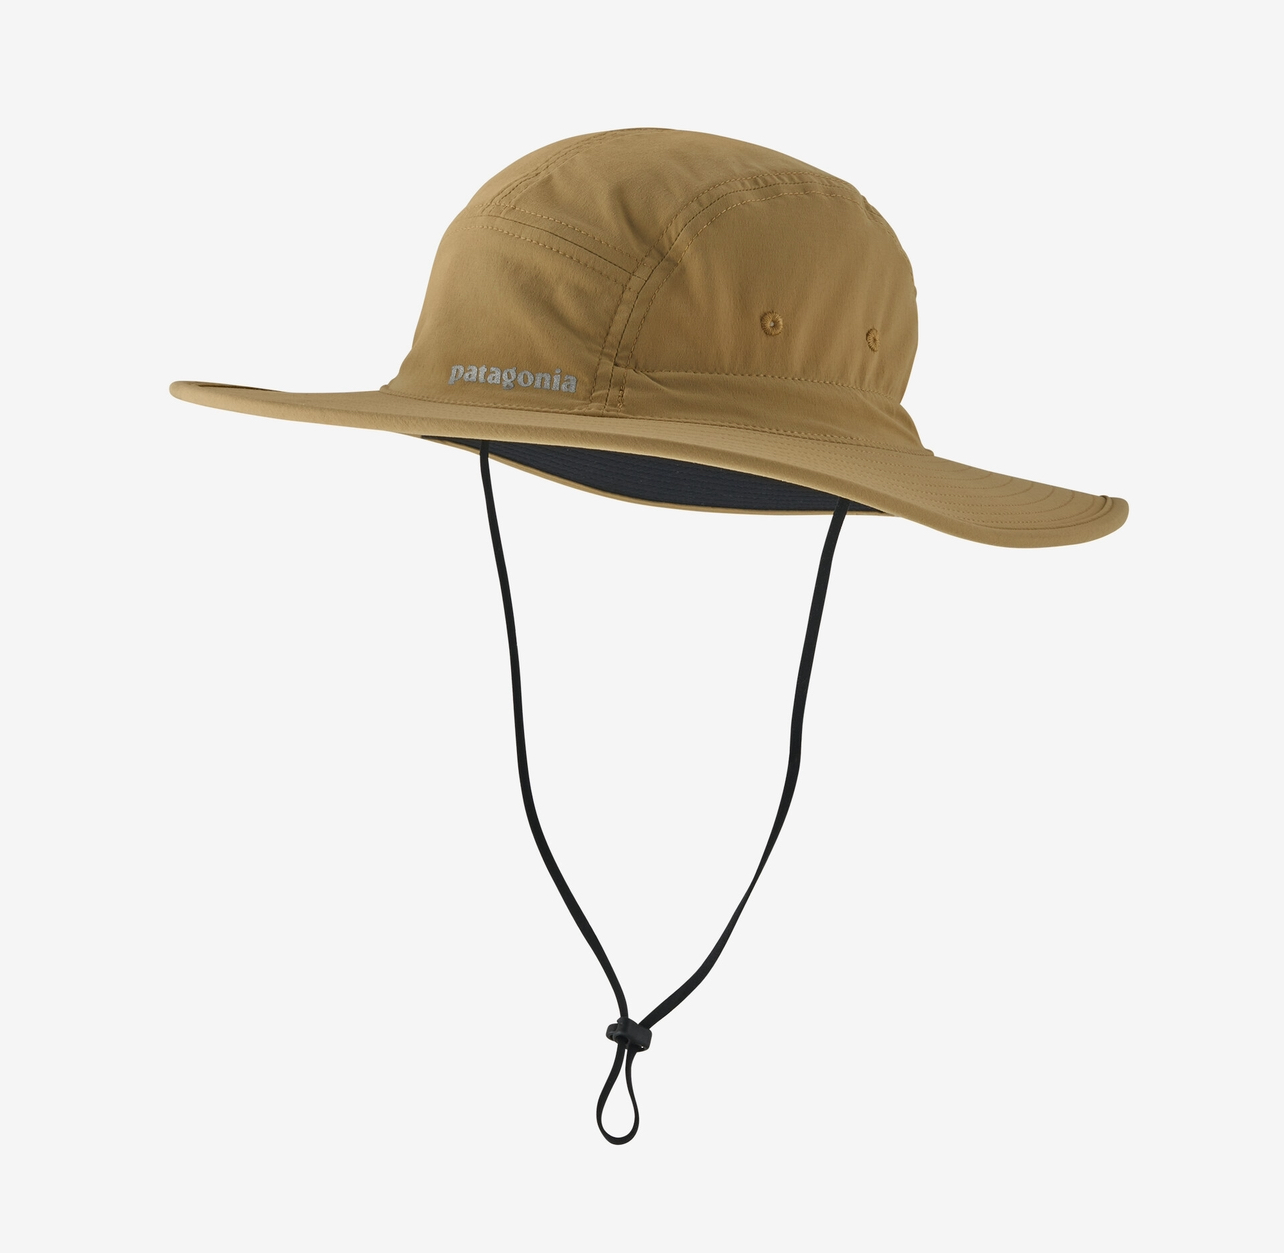 Patagonia Quandary Brimmer Hat - Classic Tan - L/XL